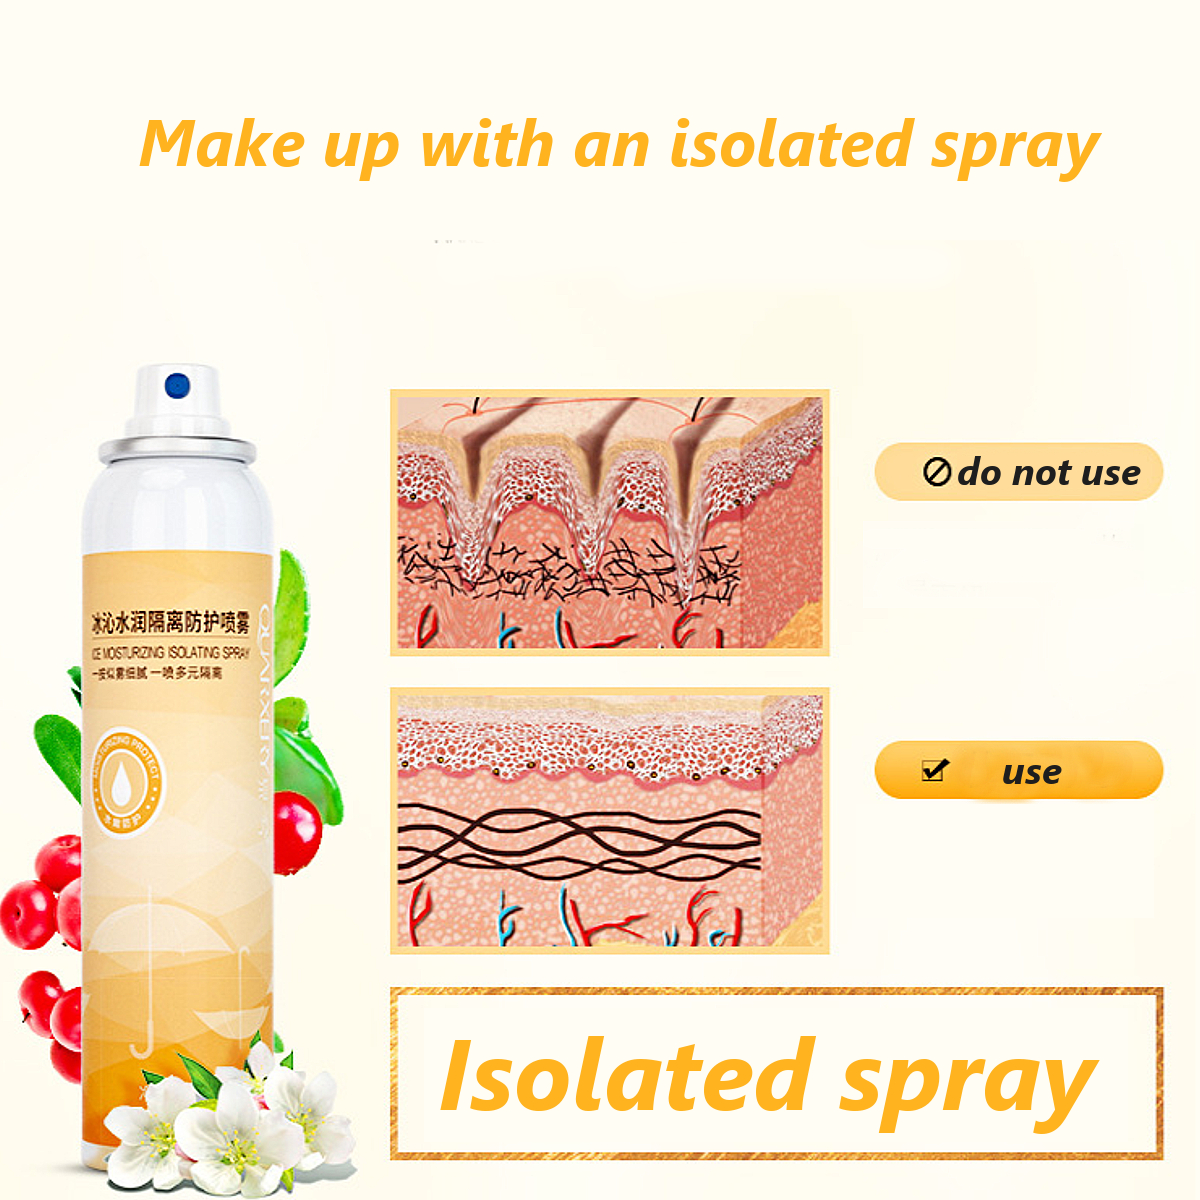 120ML-Hyaluronic-Acid-Sunscreen-Spray-Whitening-Hydrating-Skin-Care-UV-Protect-1379895